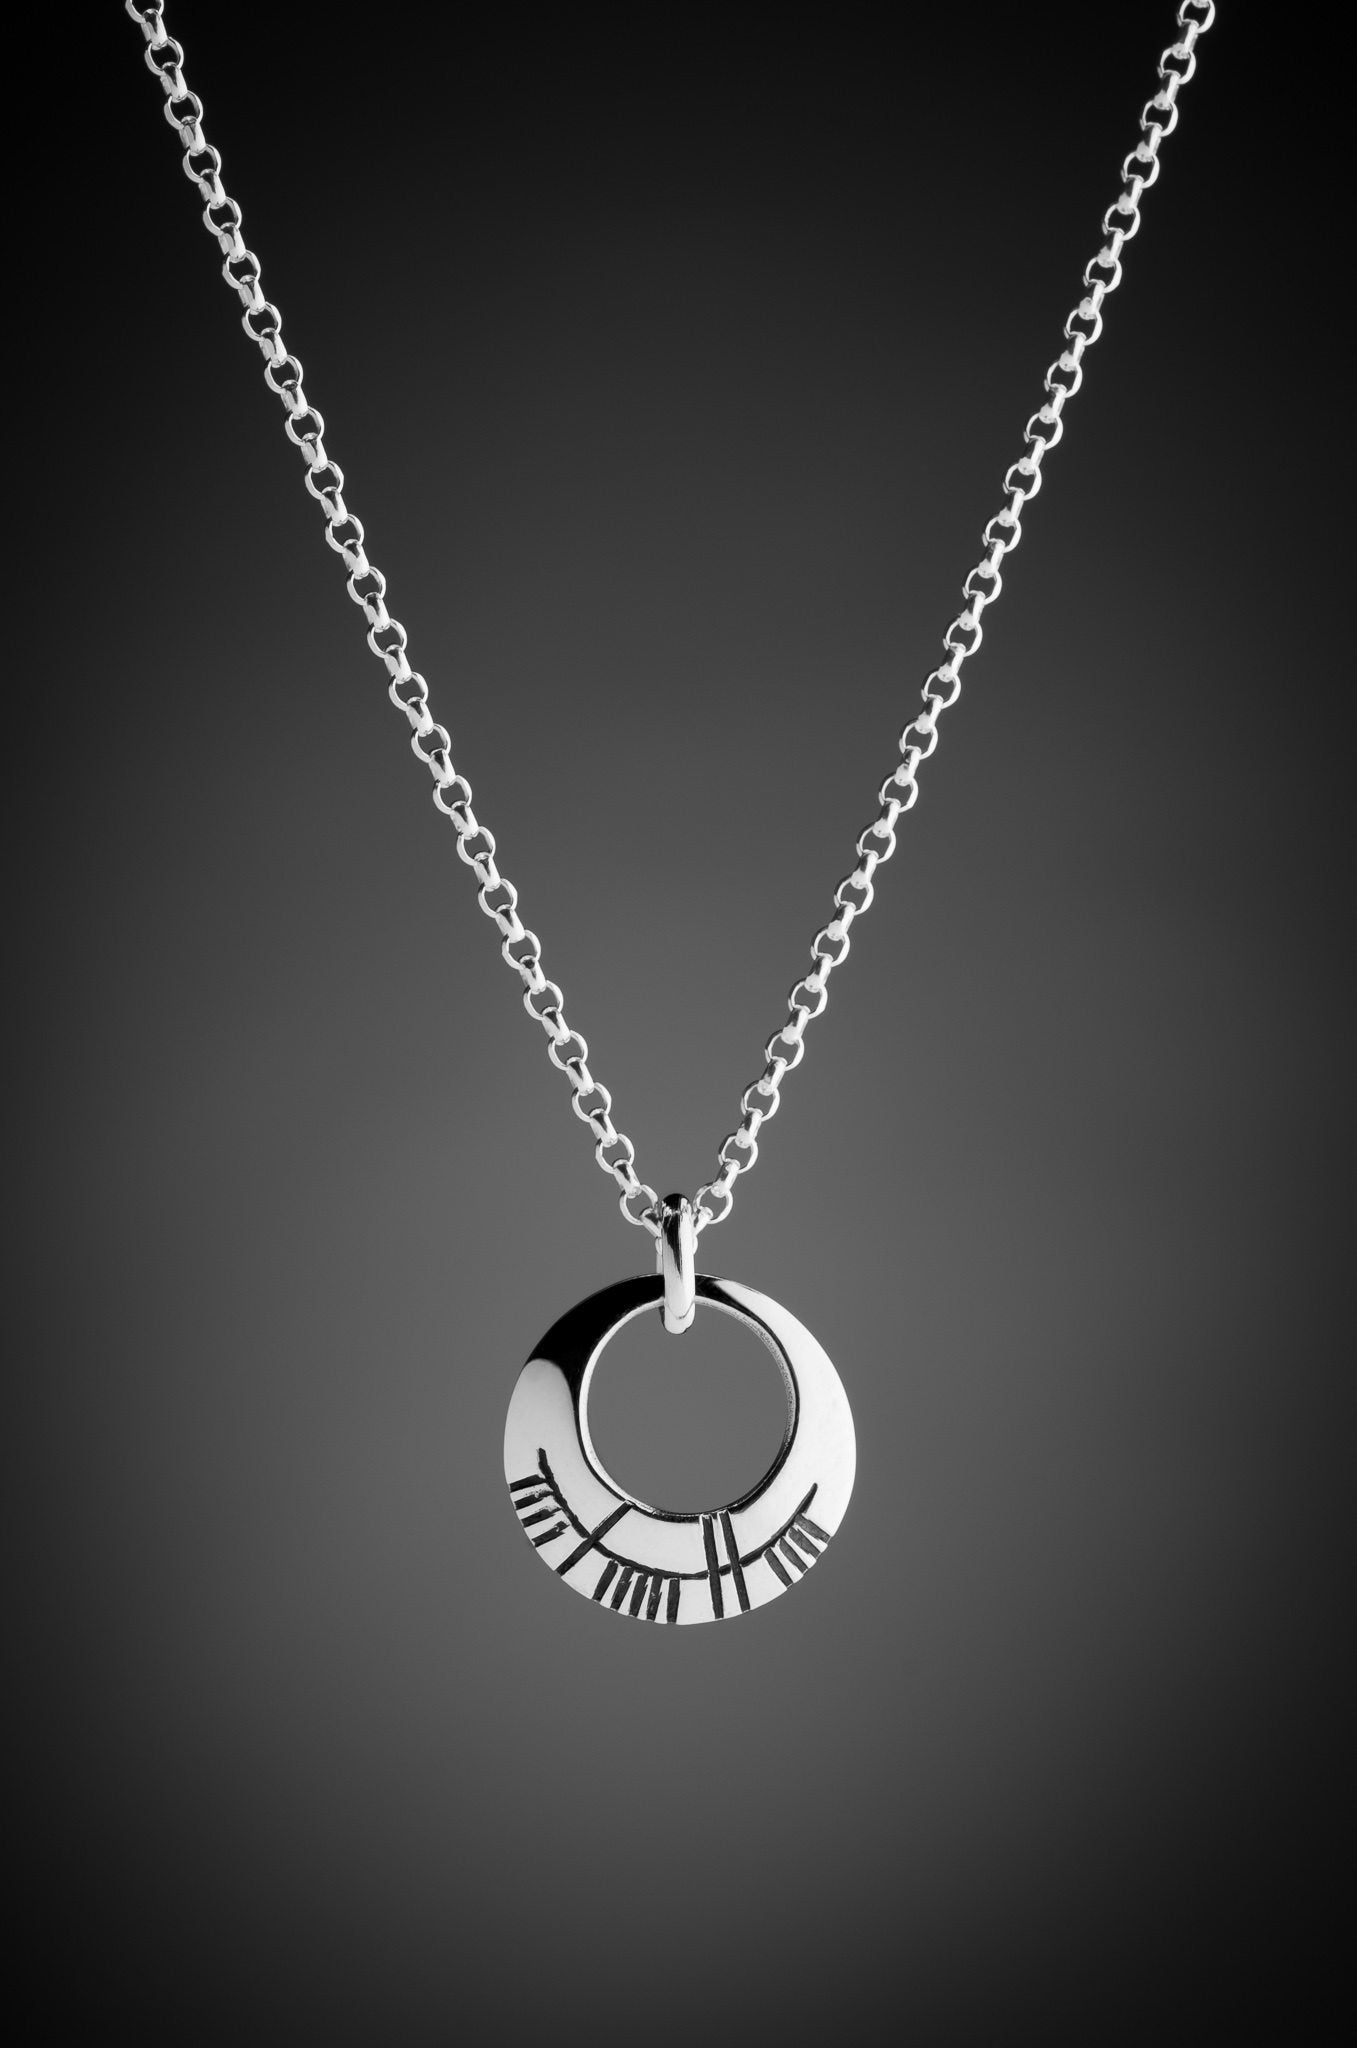 Ogham Necklace - Sterling Silver, Made in Ireland - Sterling Silver Ogham Engraved Heart Pendant